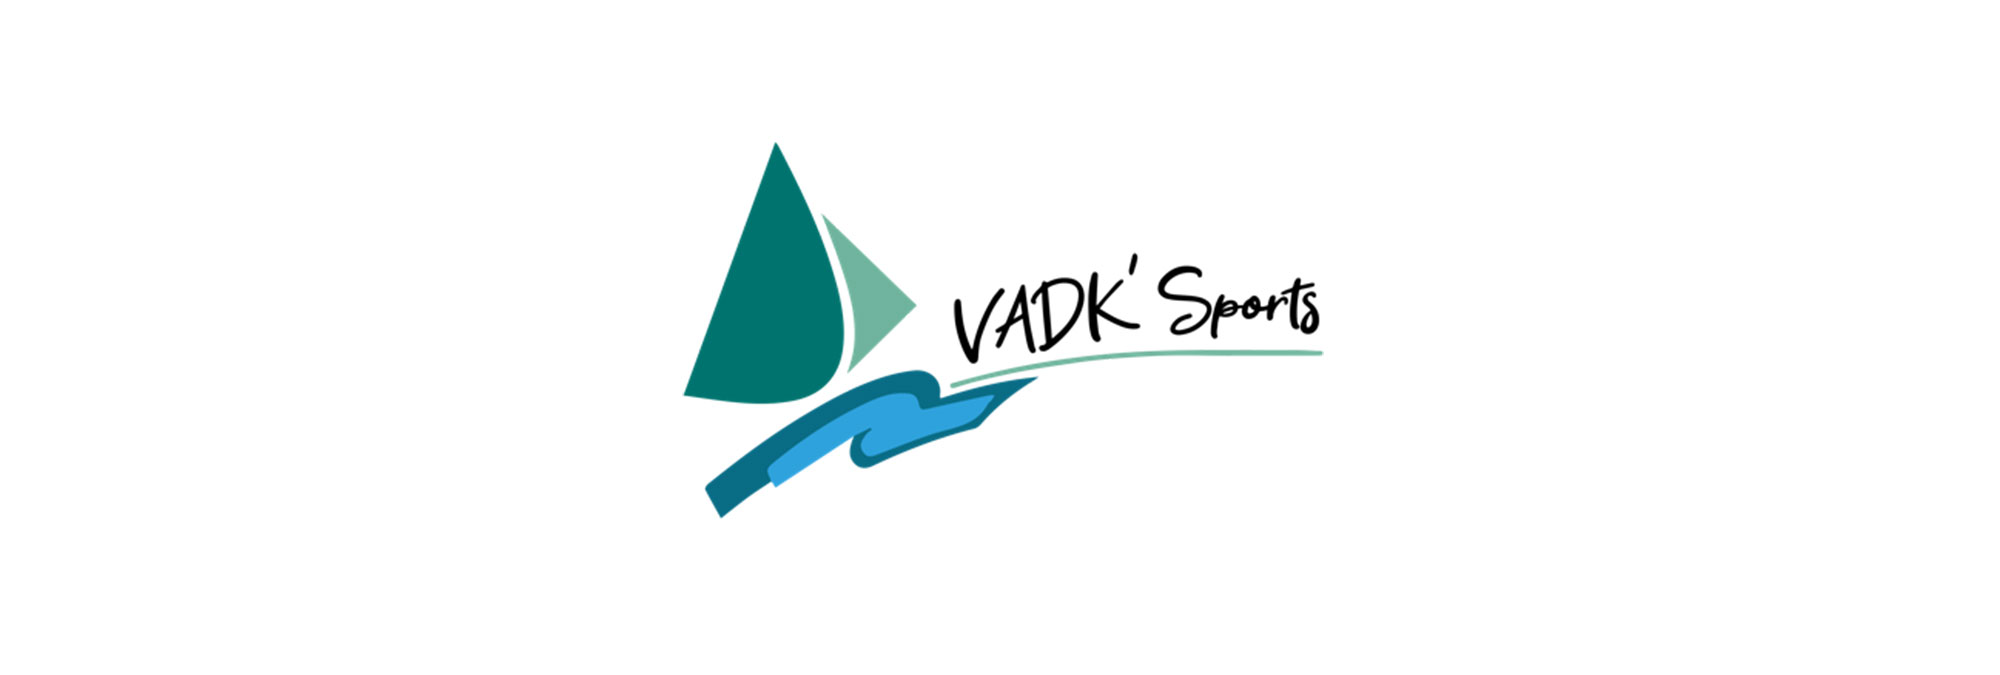 logo vadk sports